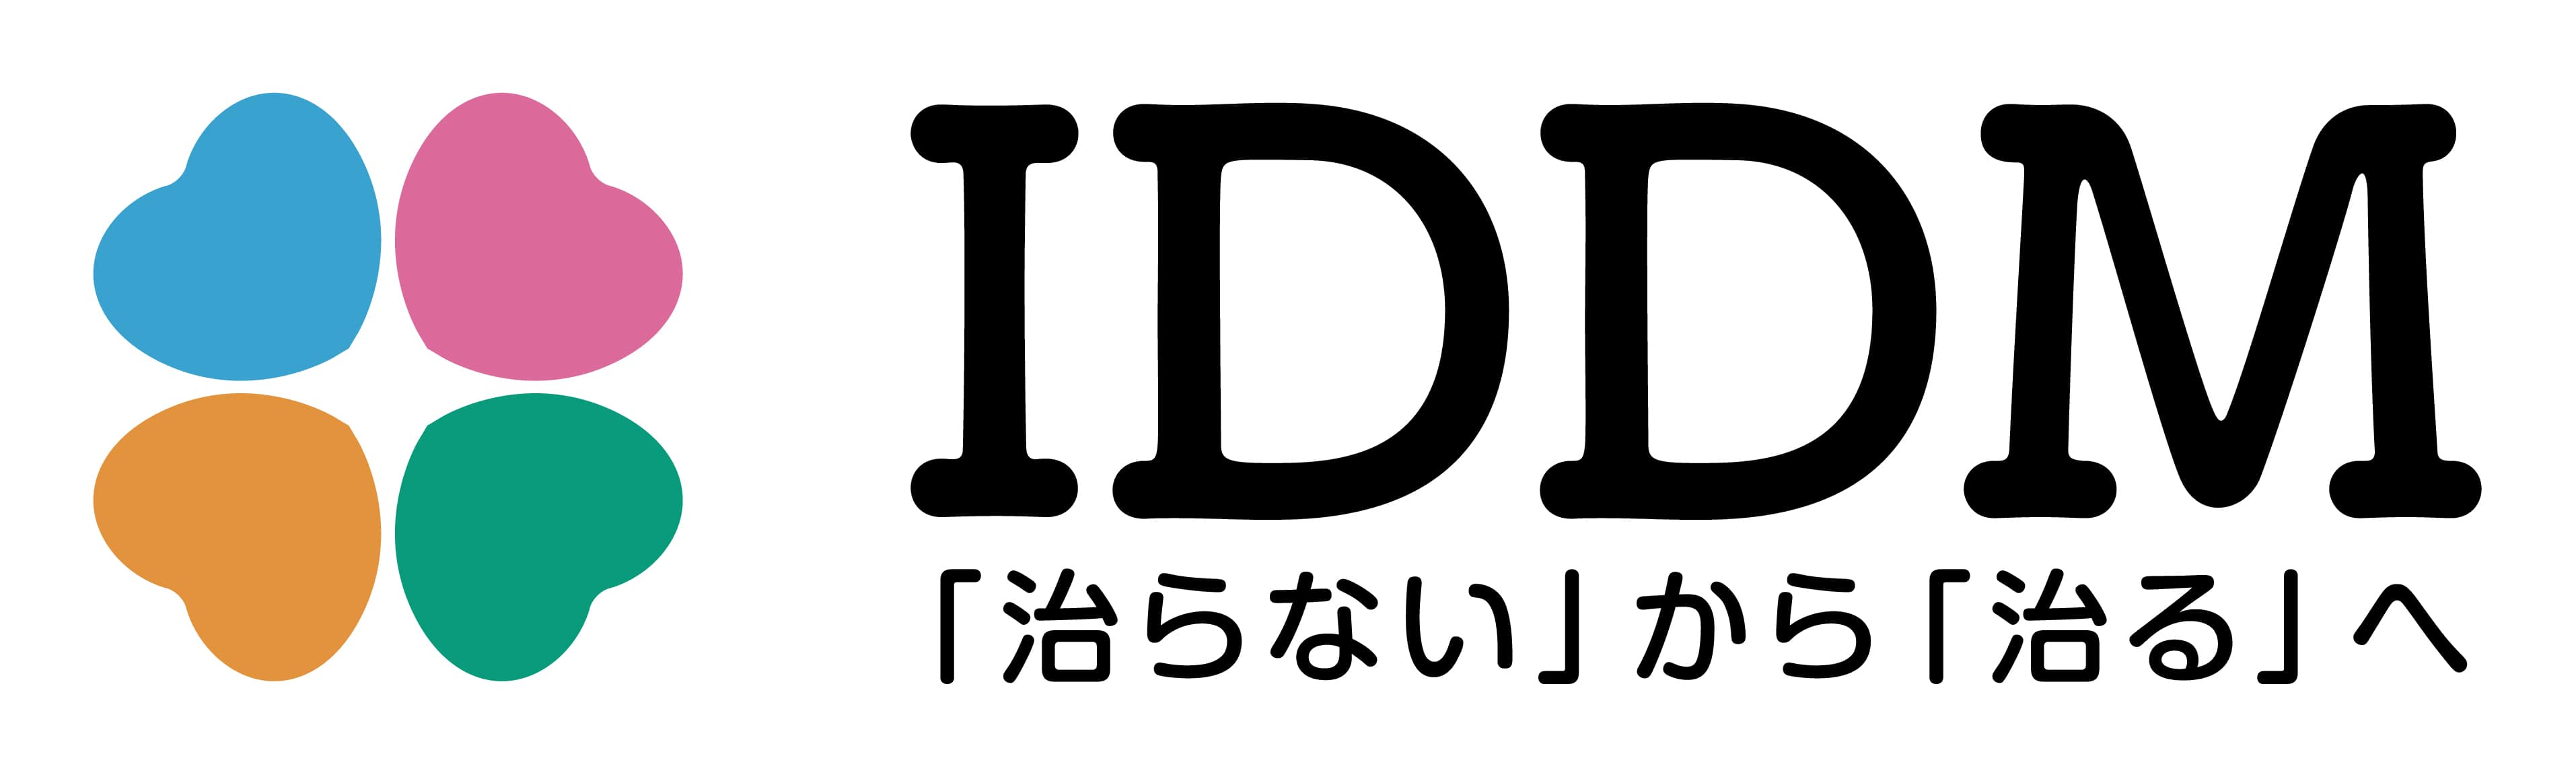 Non-Profit Organization Japan IDDM Network